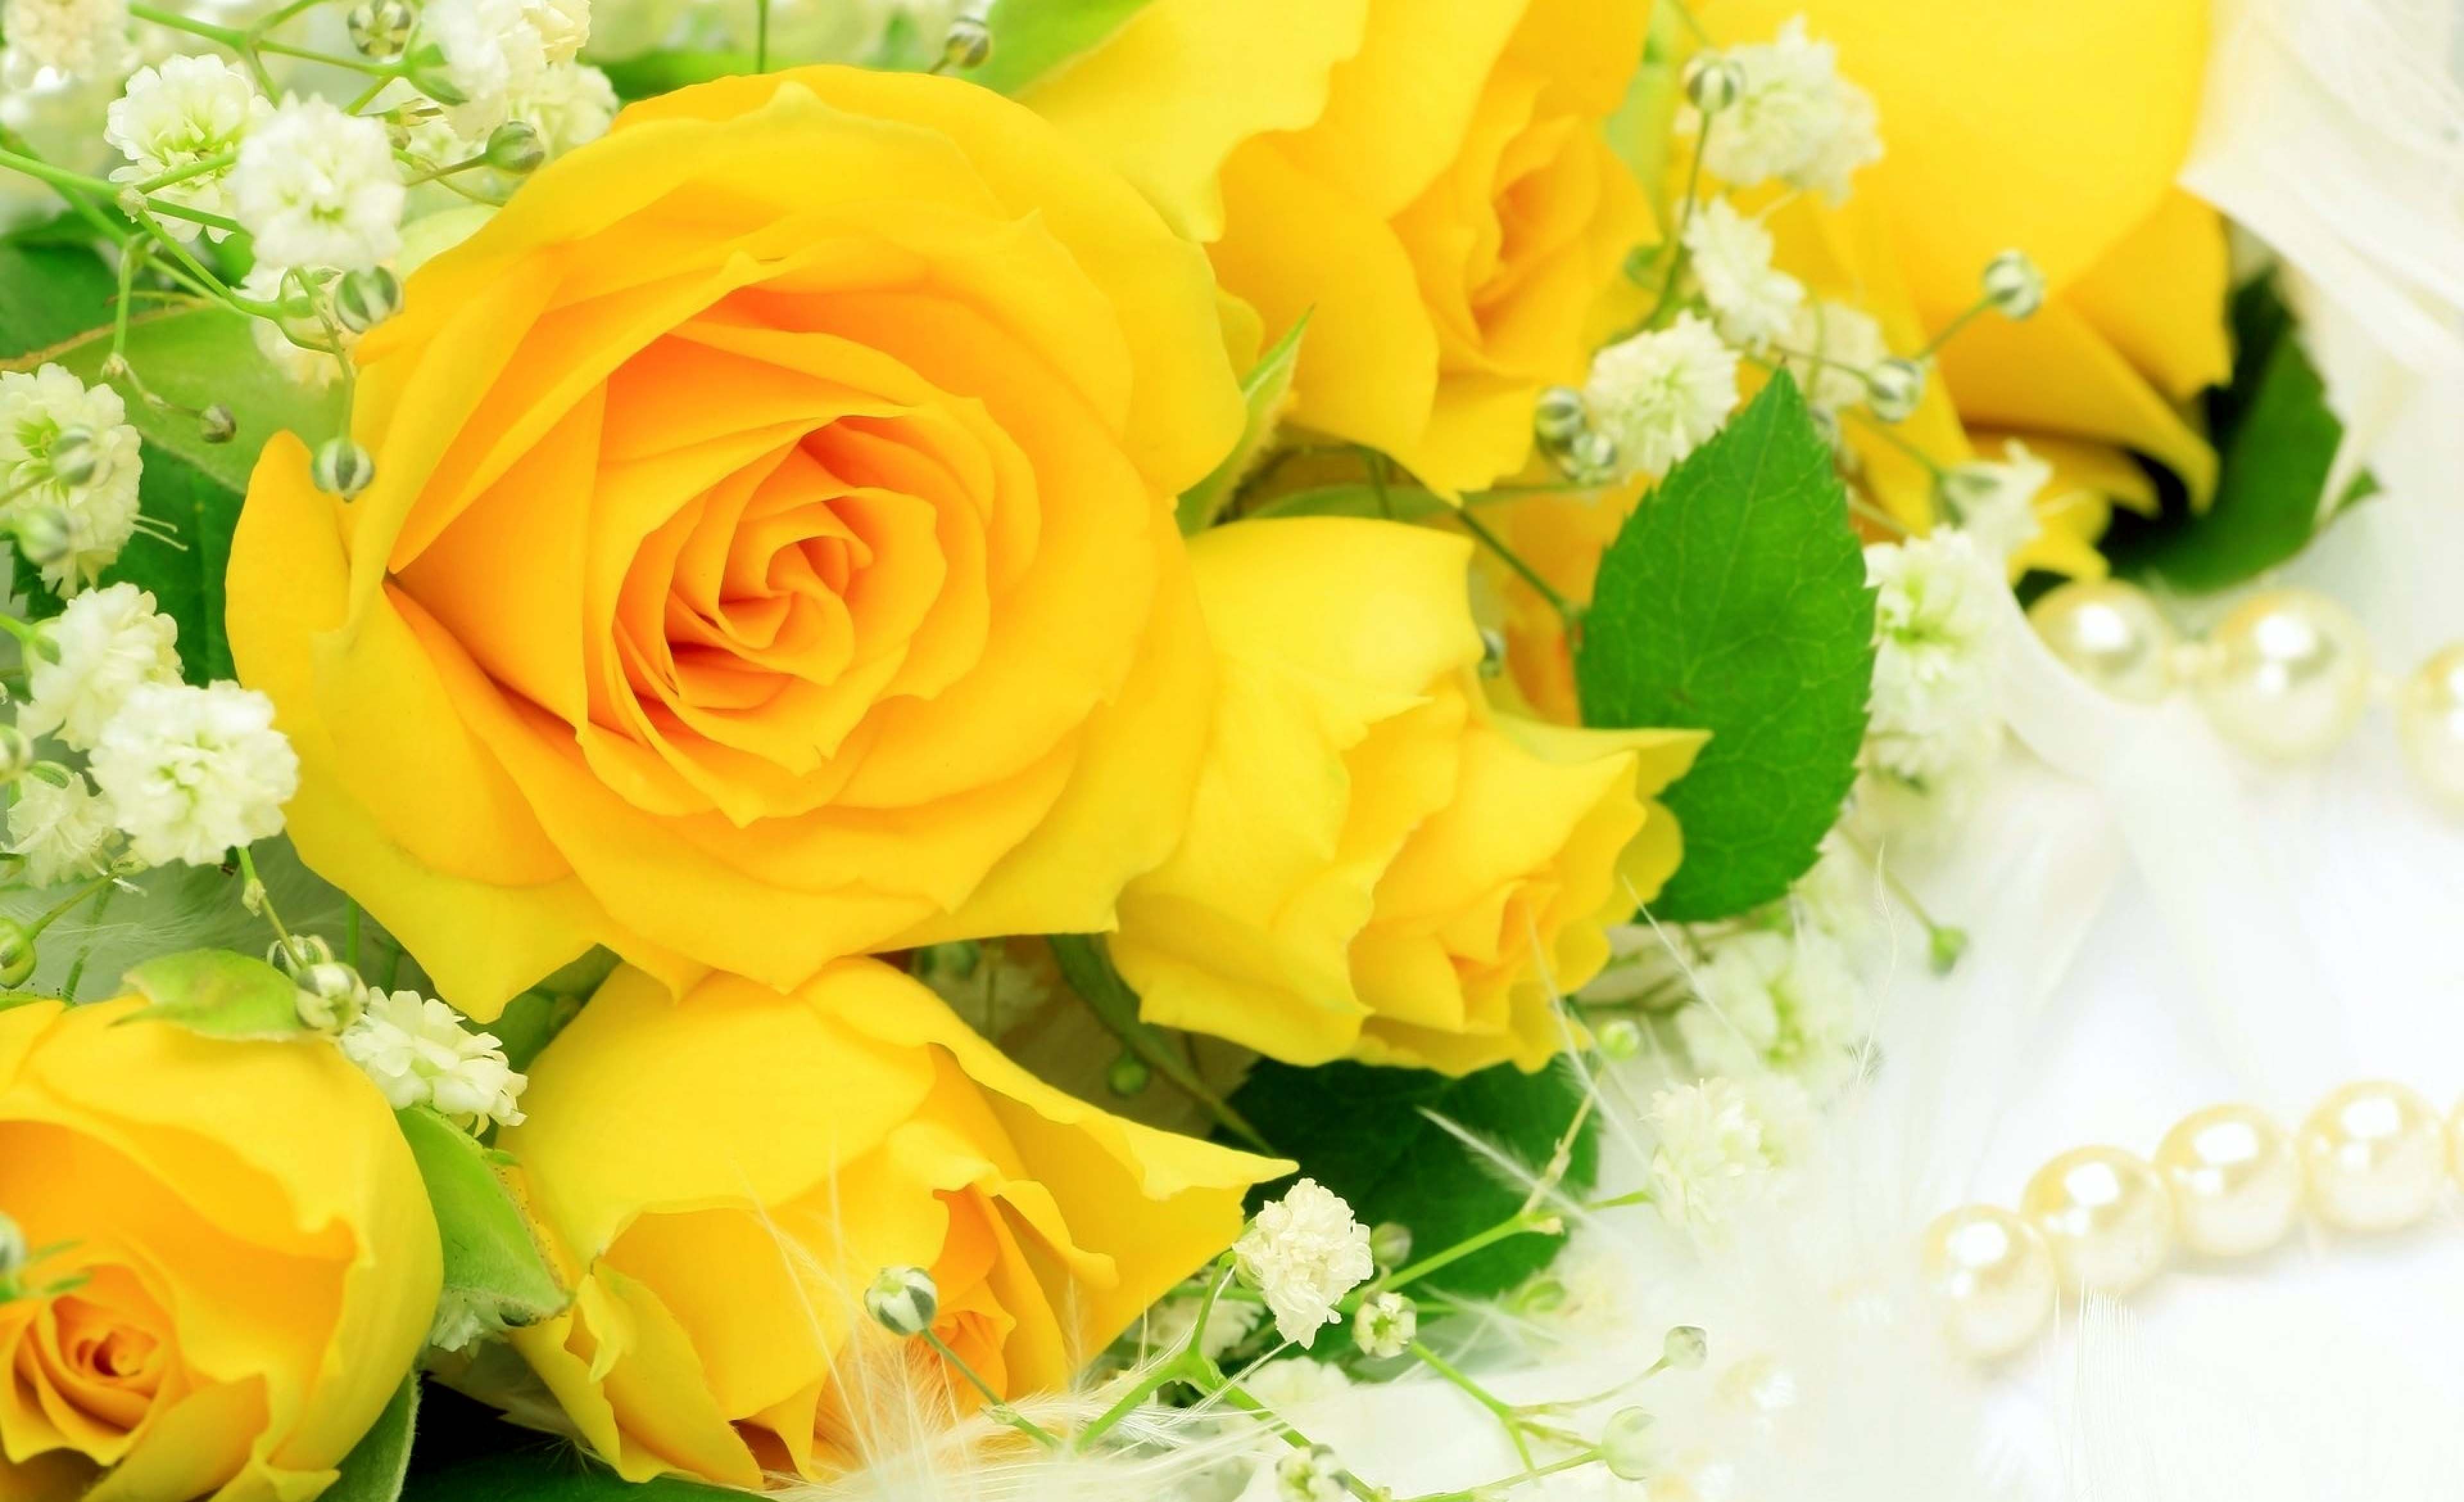 Stunning Yellow Roses Natural Beauty Image HD Wallpaper